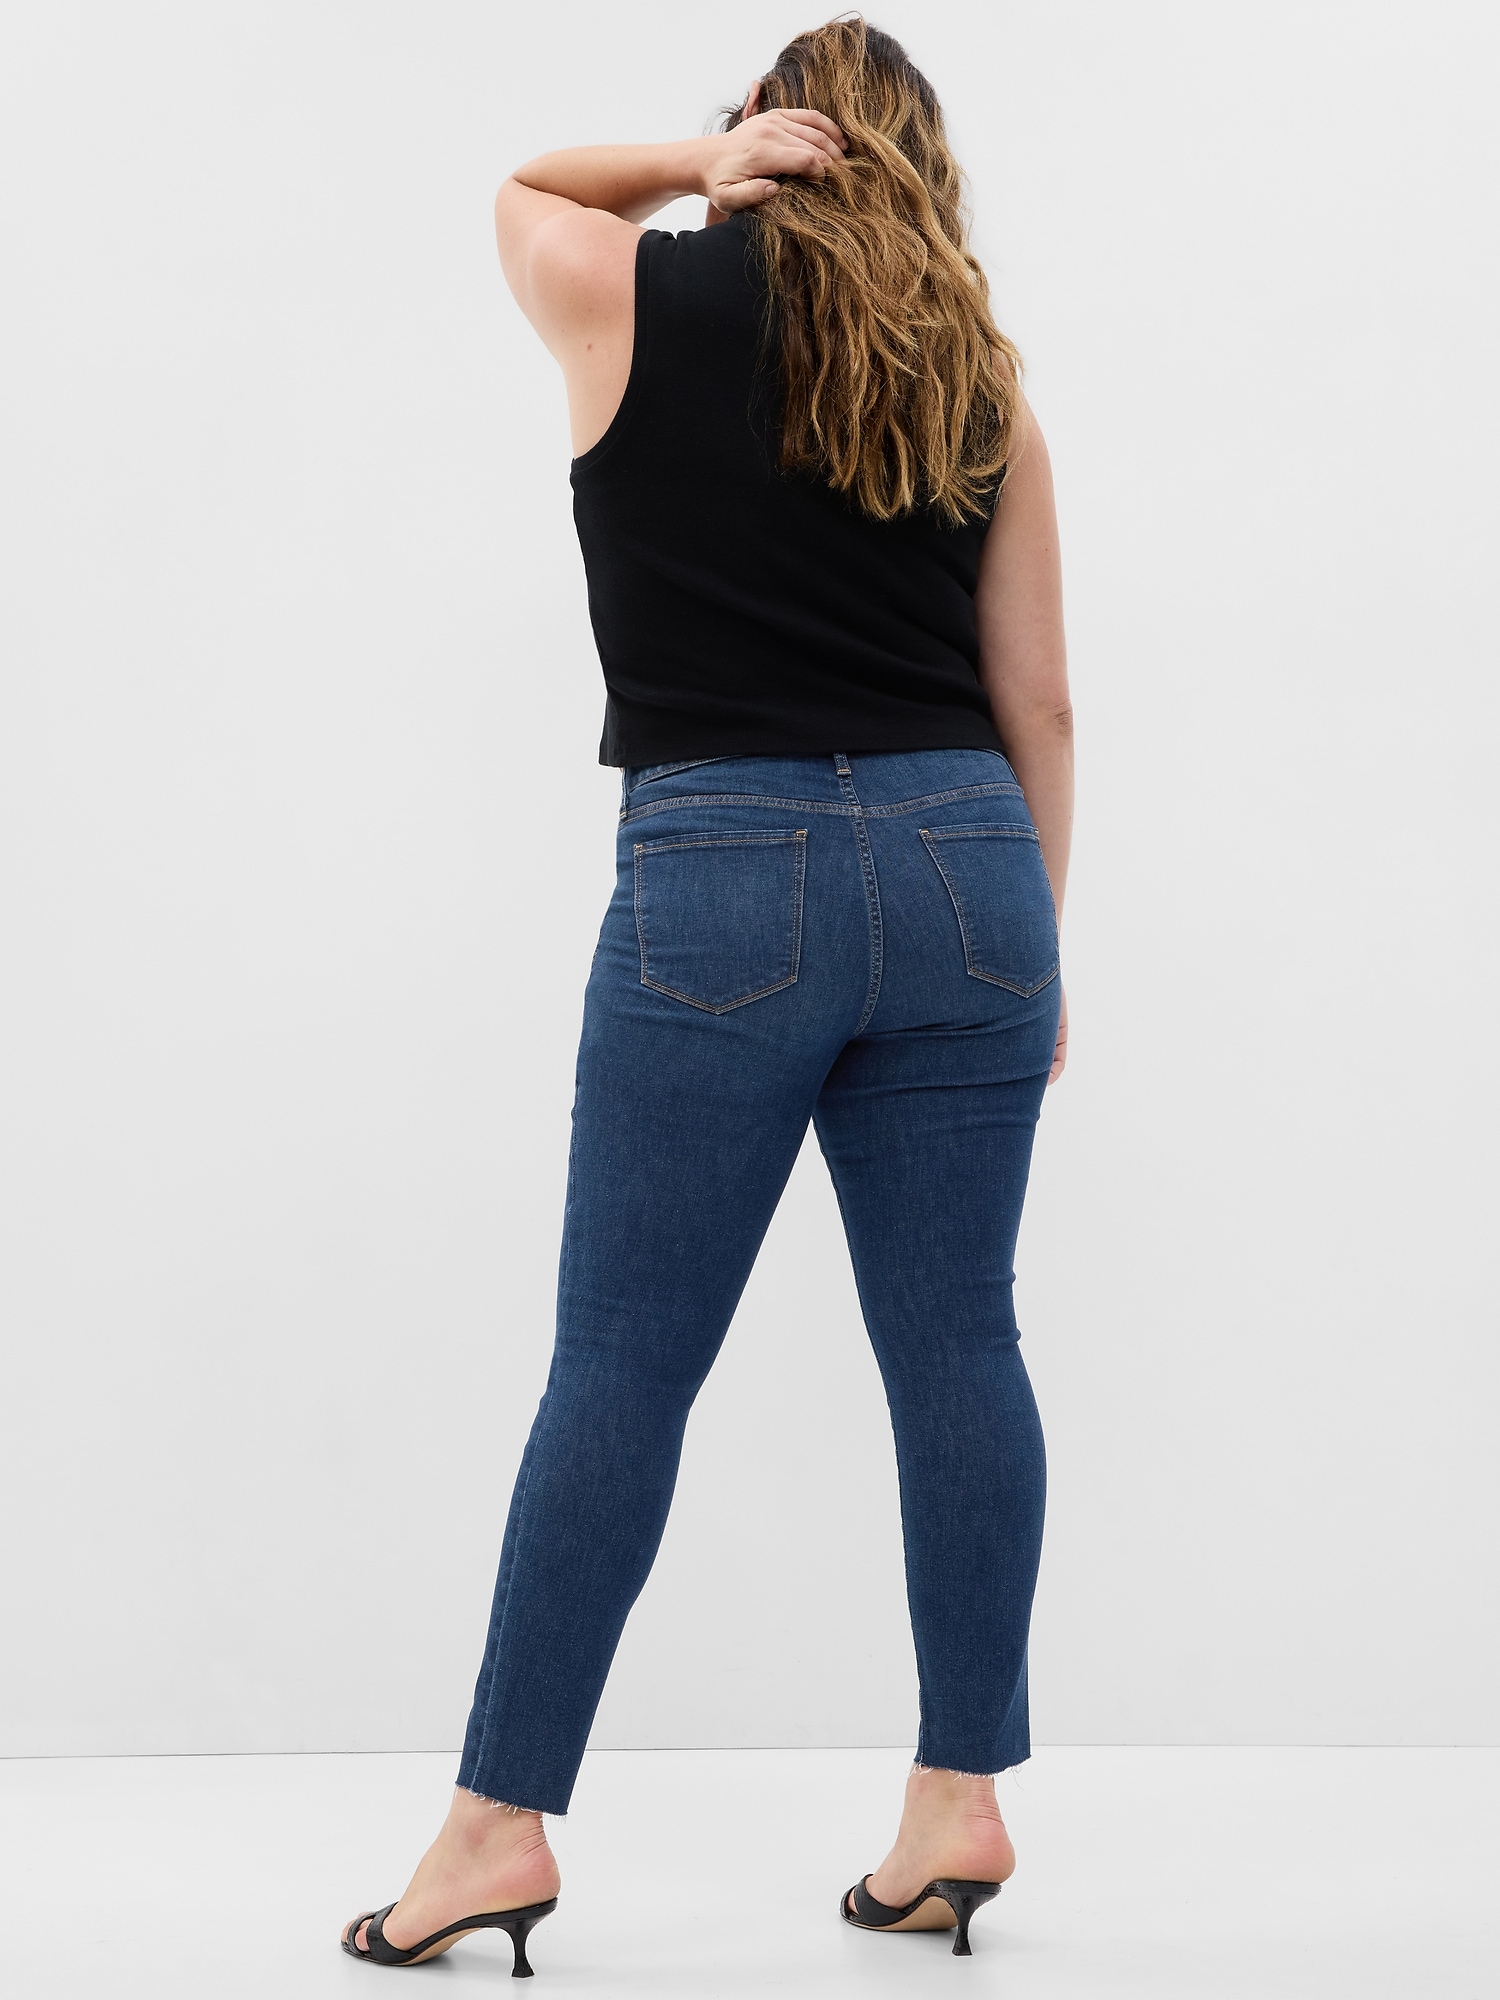 High Rise Universal Jeggings  High rise black jeans, Gap denim